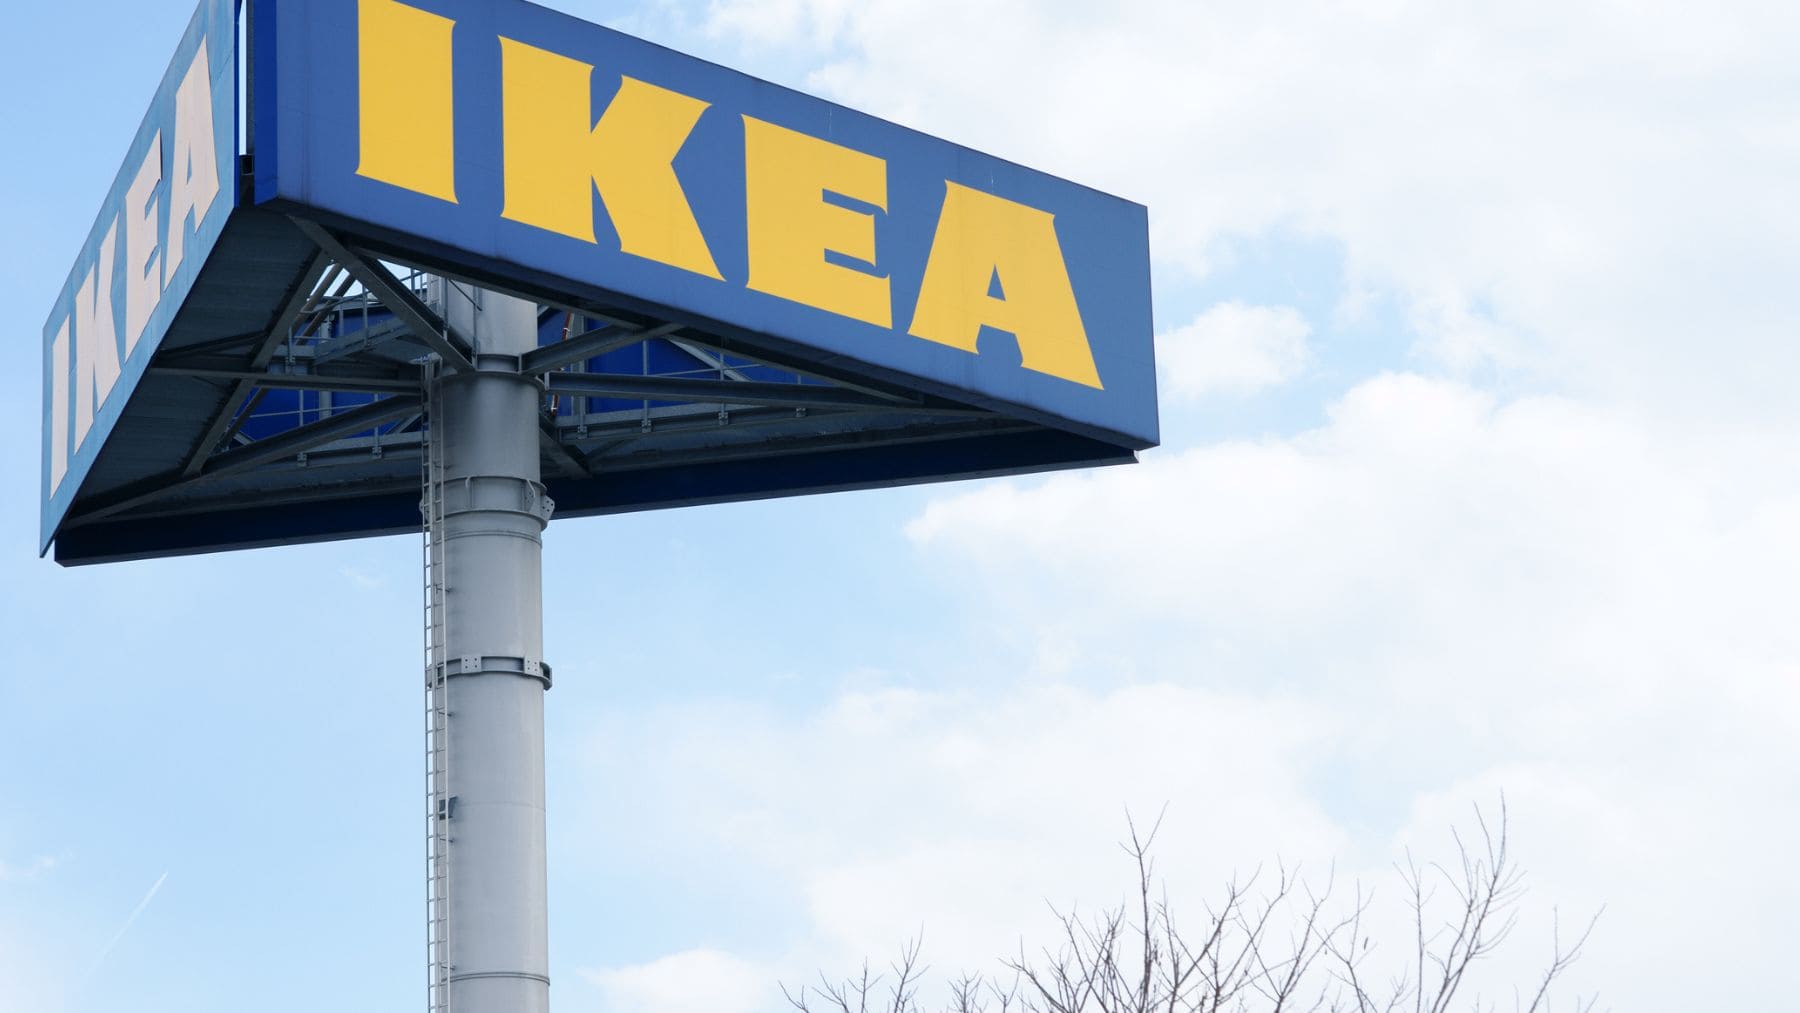 Cómo elegir la placa perfecta - IKEA